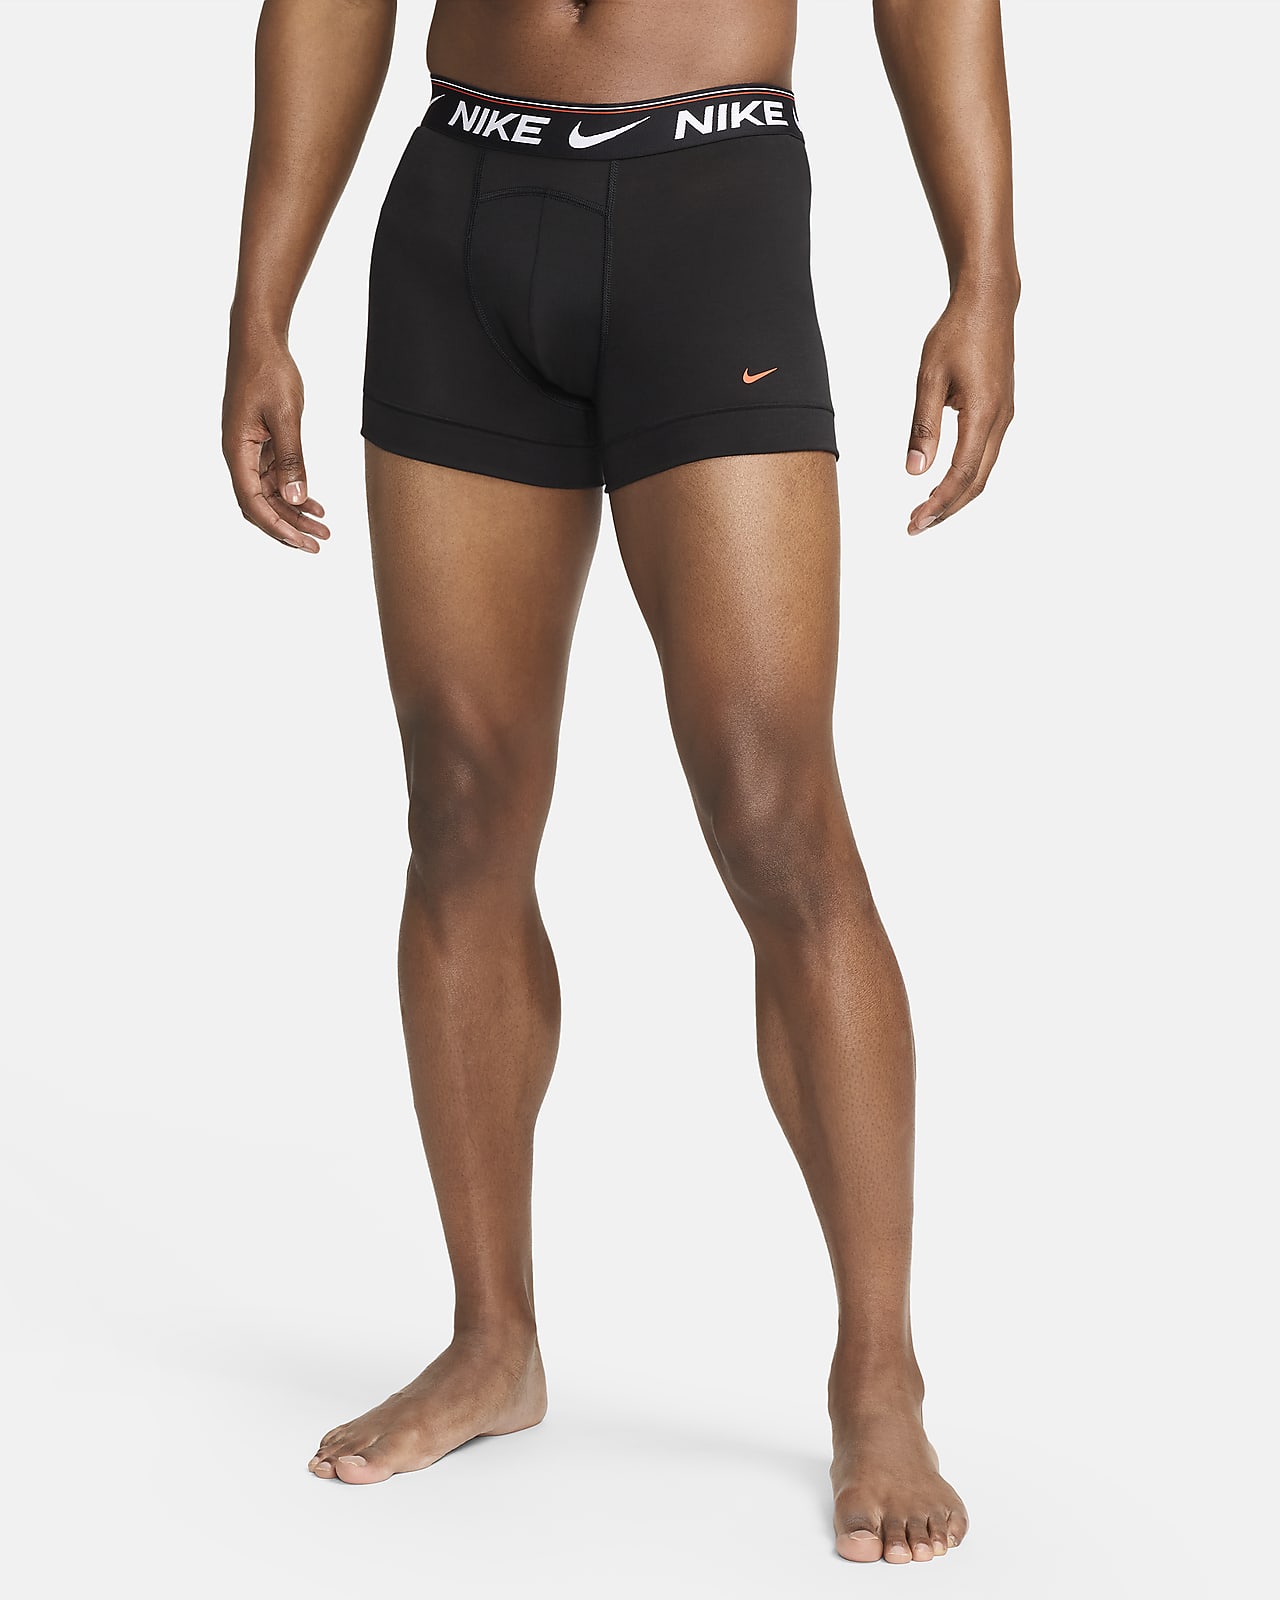 Nike Dri-FIT Ultra Comfort Men's Trunks (3-Pack).